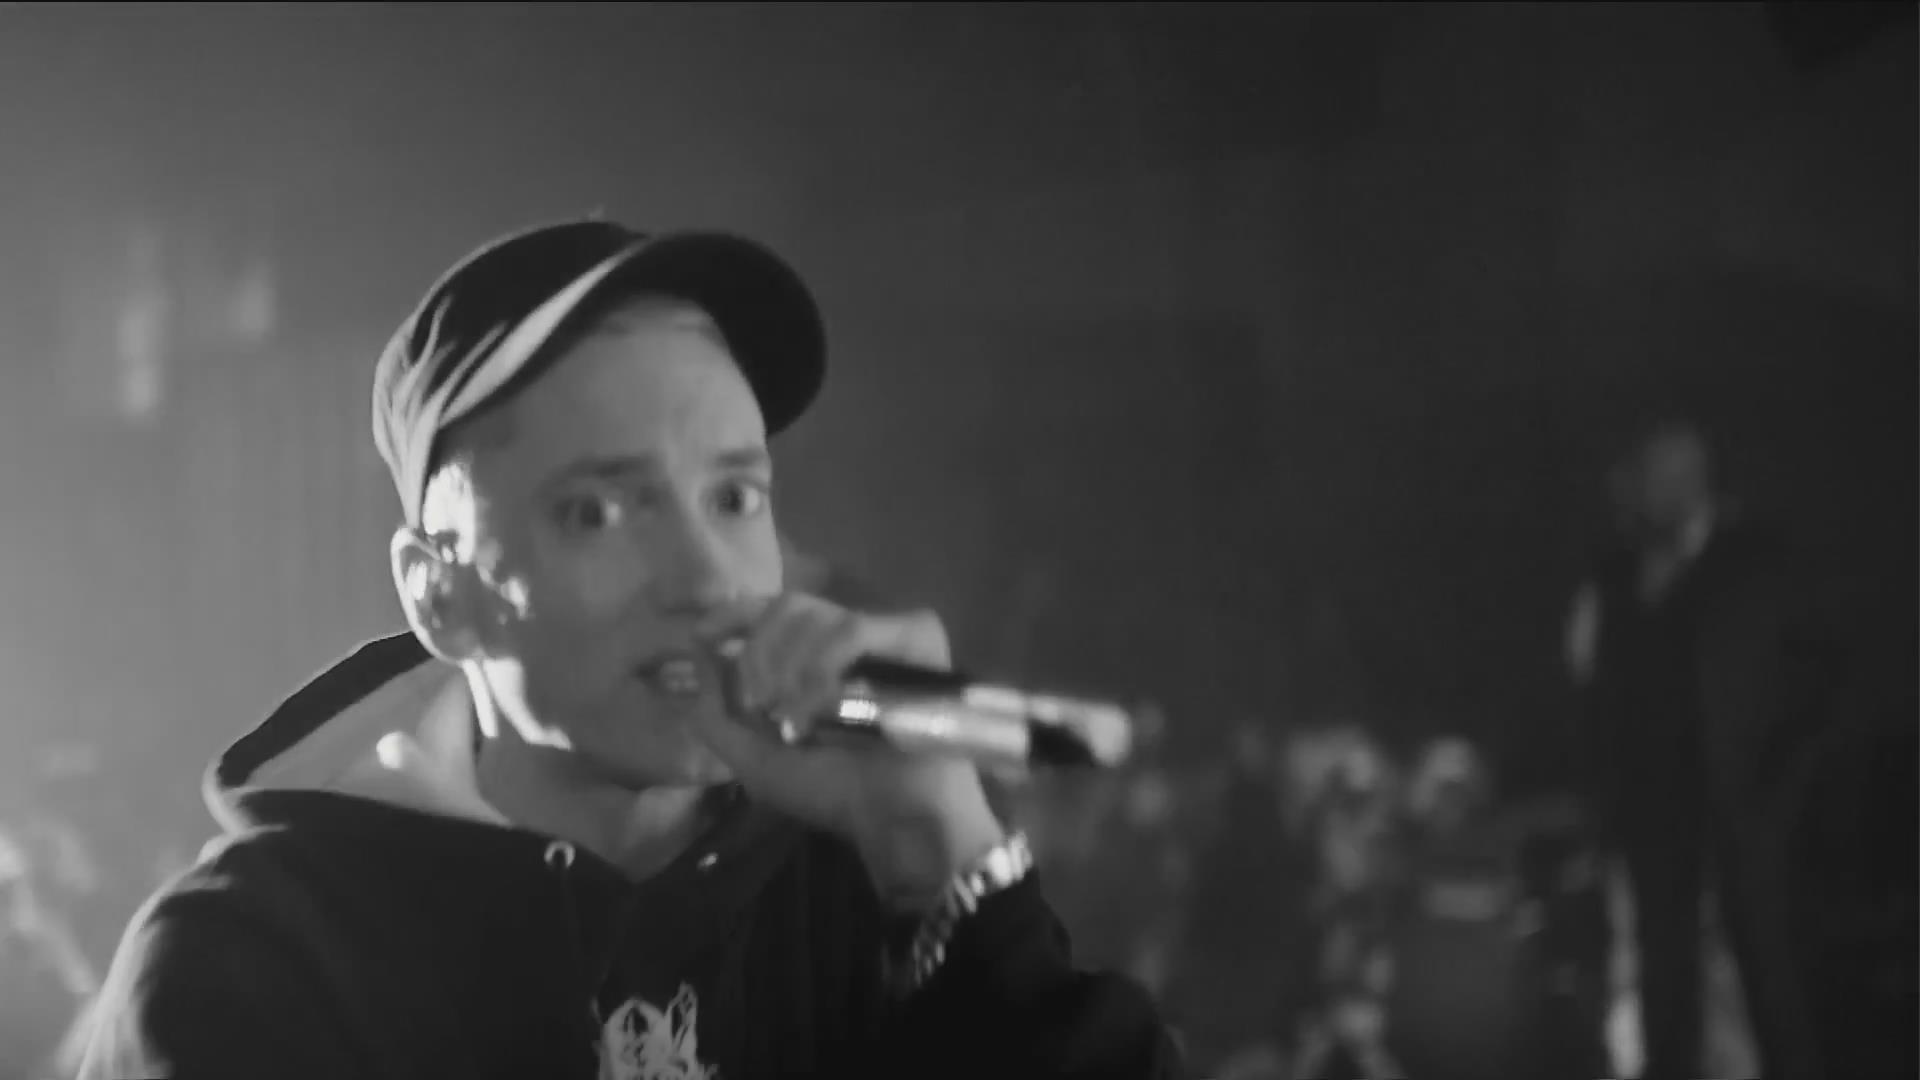 Eminem - Rap God Live at YouTube Music Awards 2013